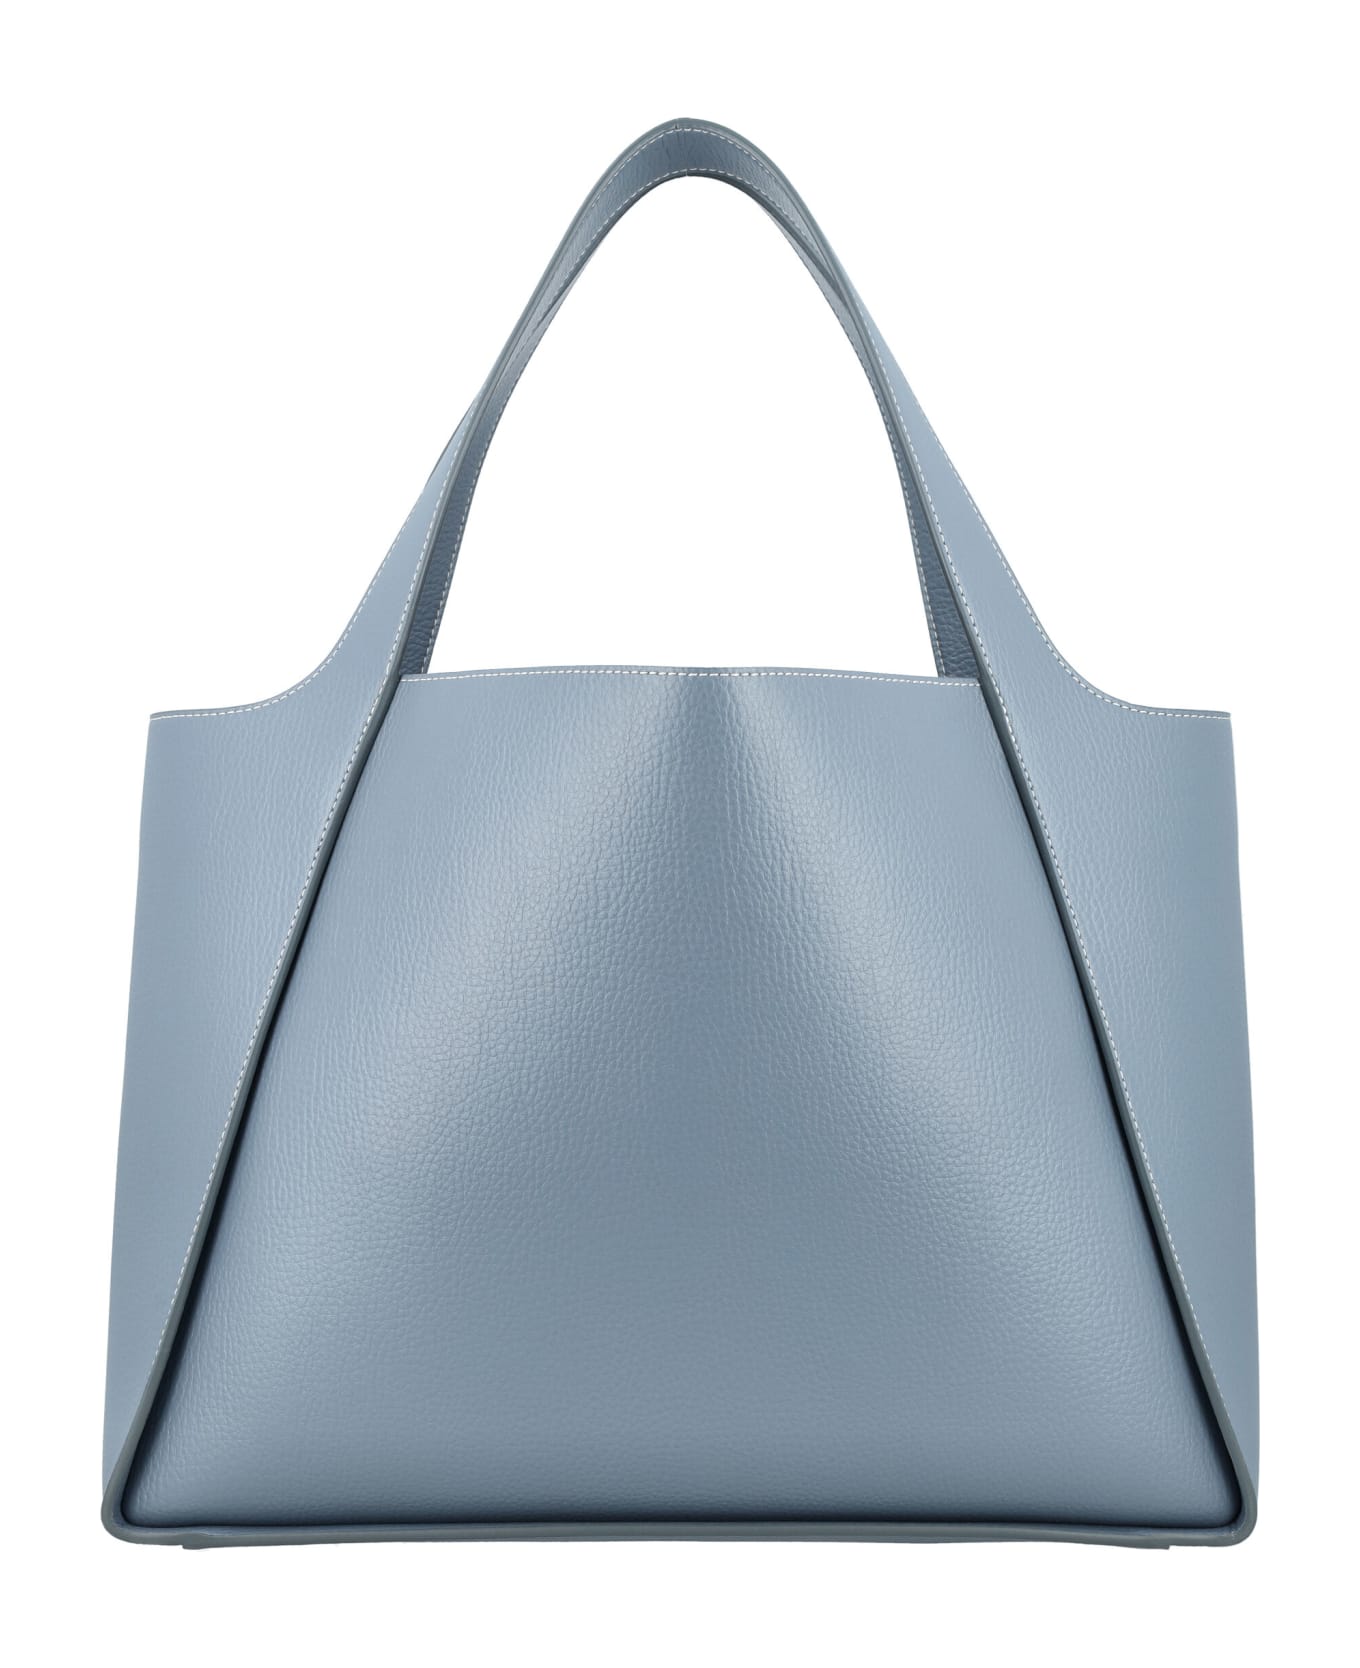 Stella McCartney Logo Grainy Alter Mat Tote Bag - BLUE GREY